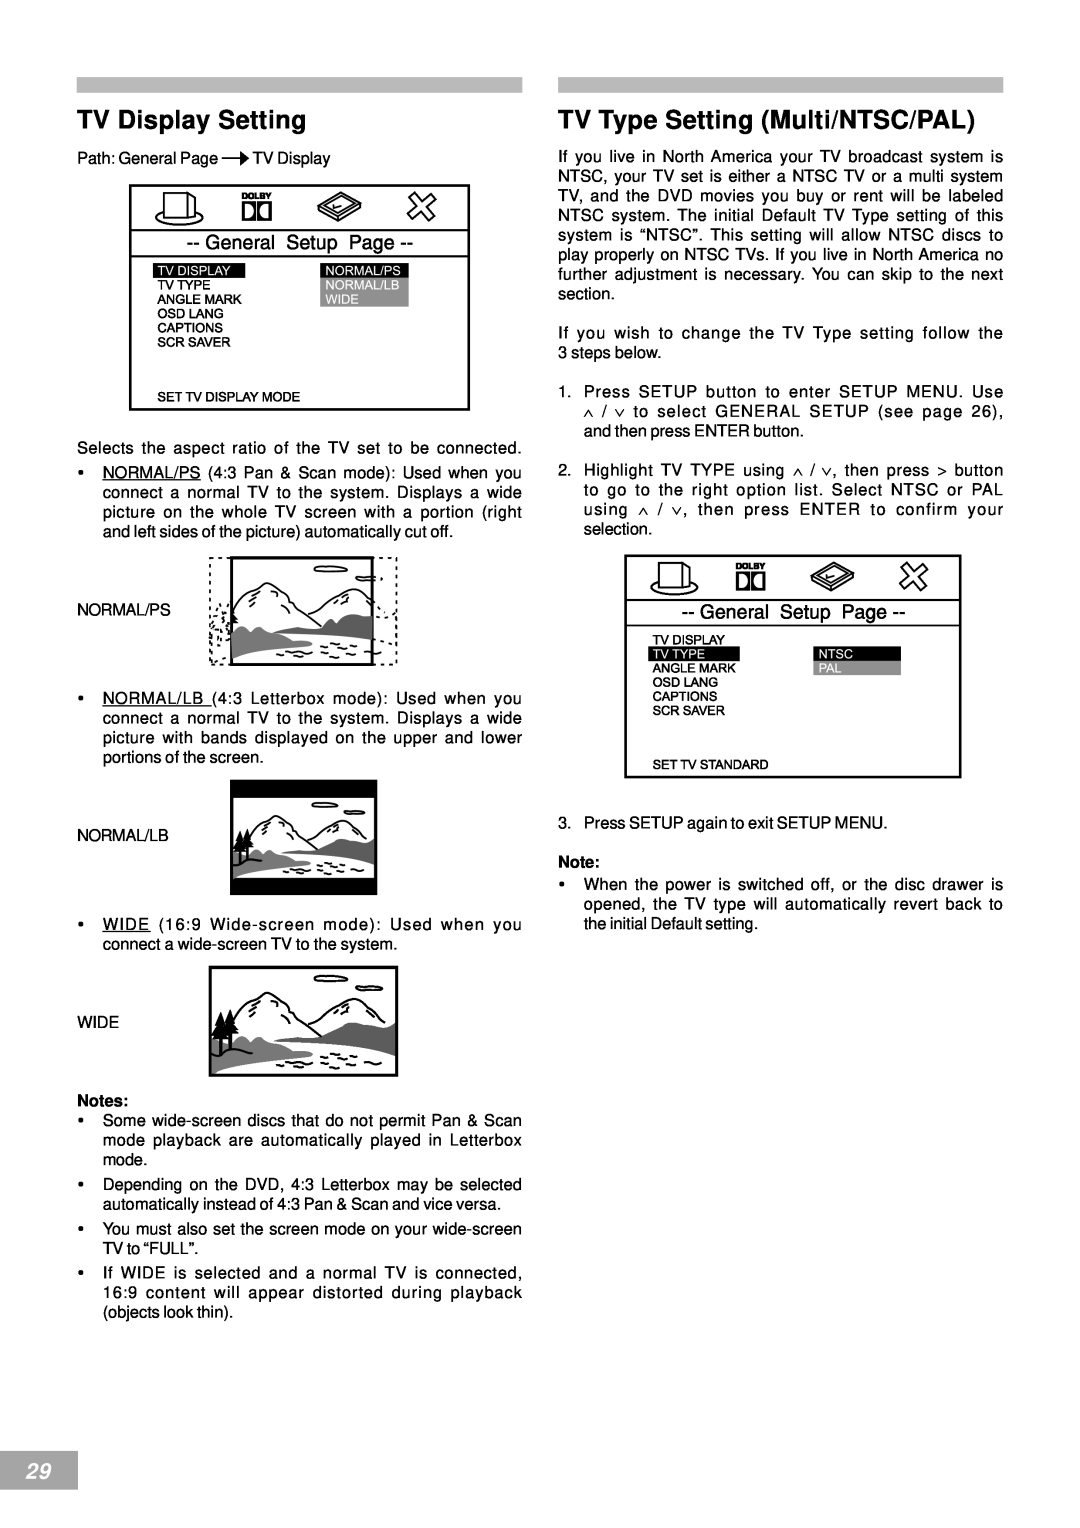 Emerson AV50 owner manual TV Display Setting, TV Type Setting Multi/NTSC/PAL 